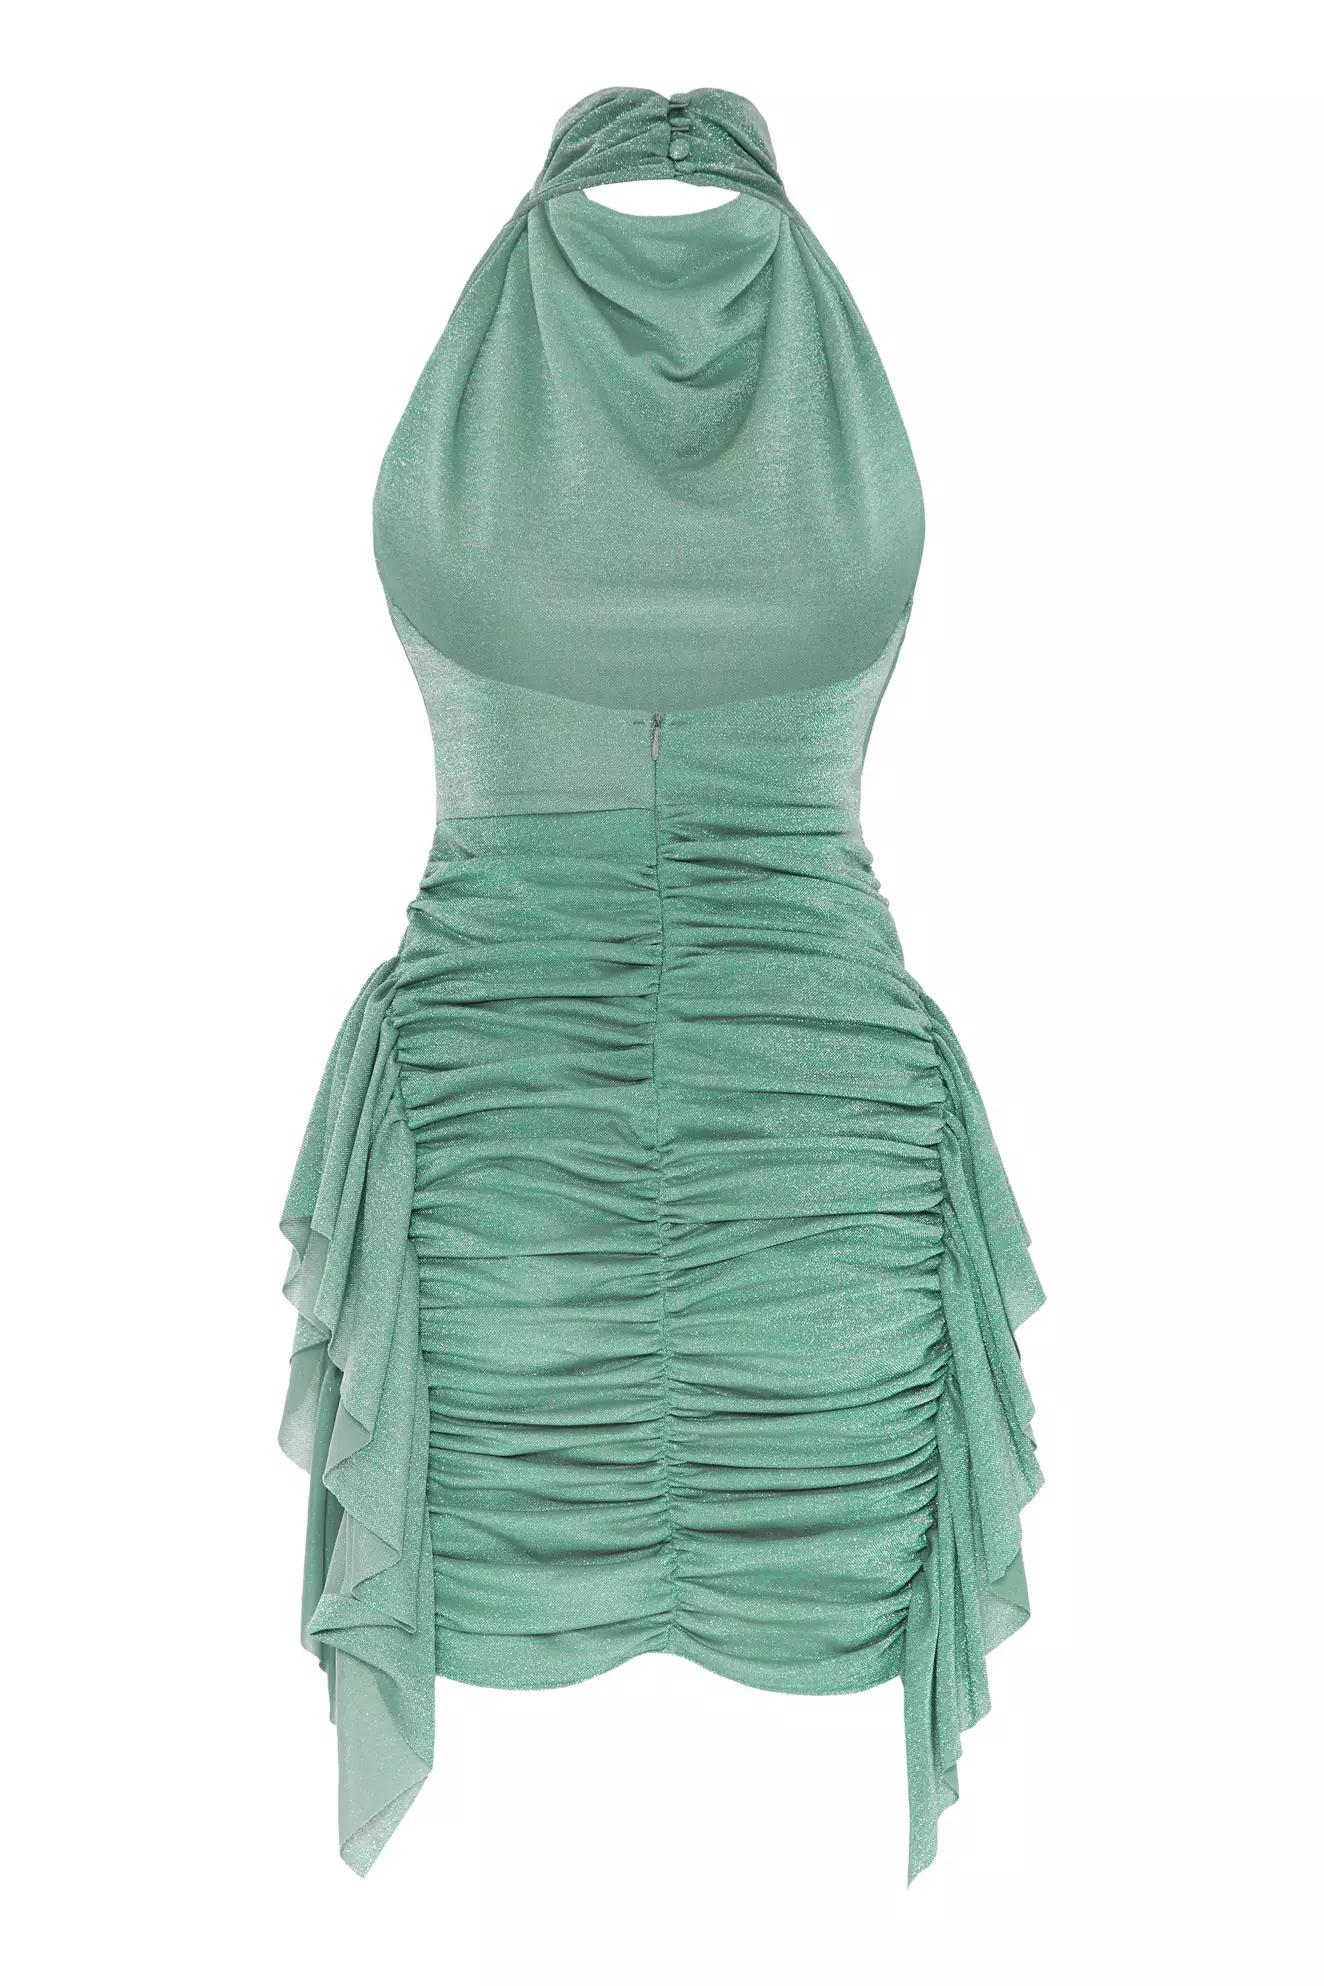 Mint green sparky sleeveless mini dress